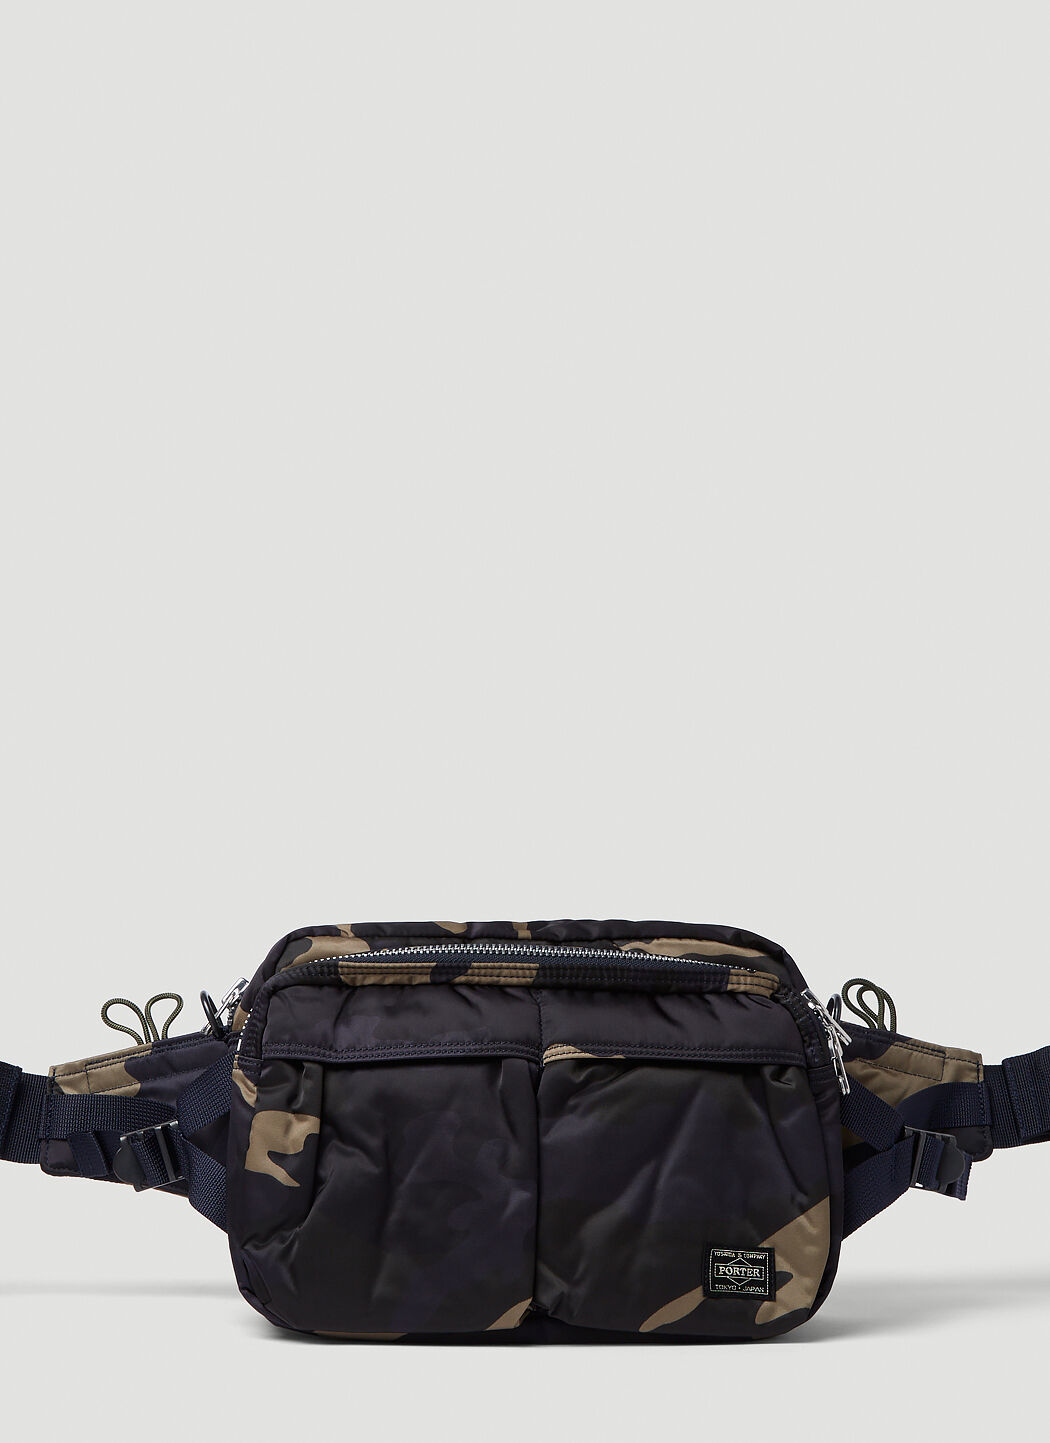 Porter-Yoshida and Co | Tanker 2Way Nylon Duffle Bag | Men | Black |  MILANSTYLE.COM